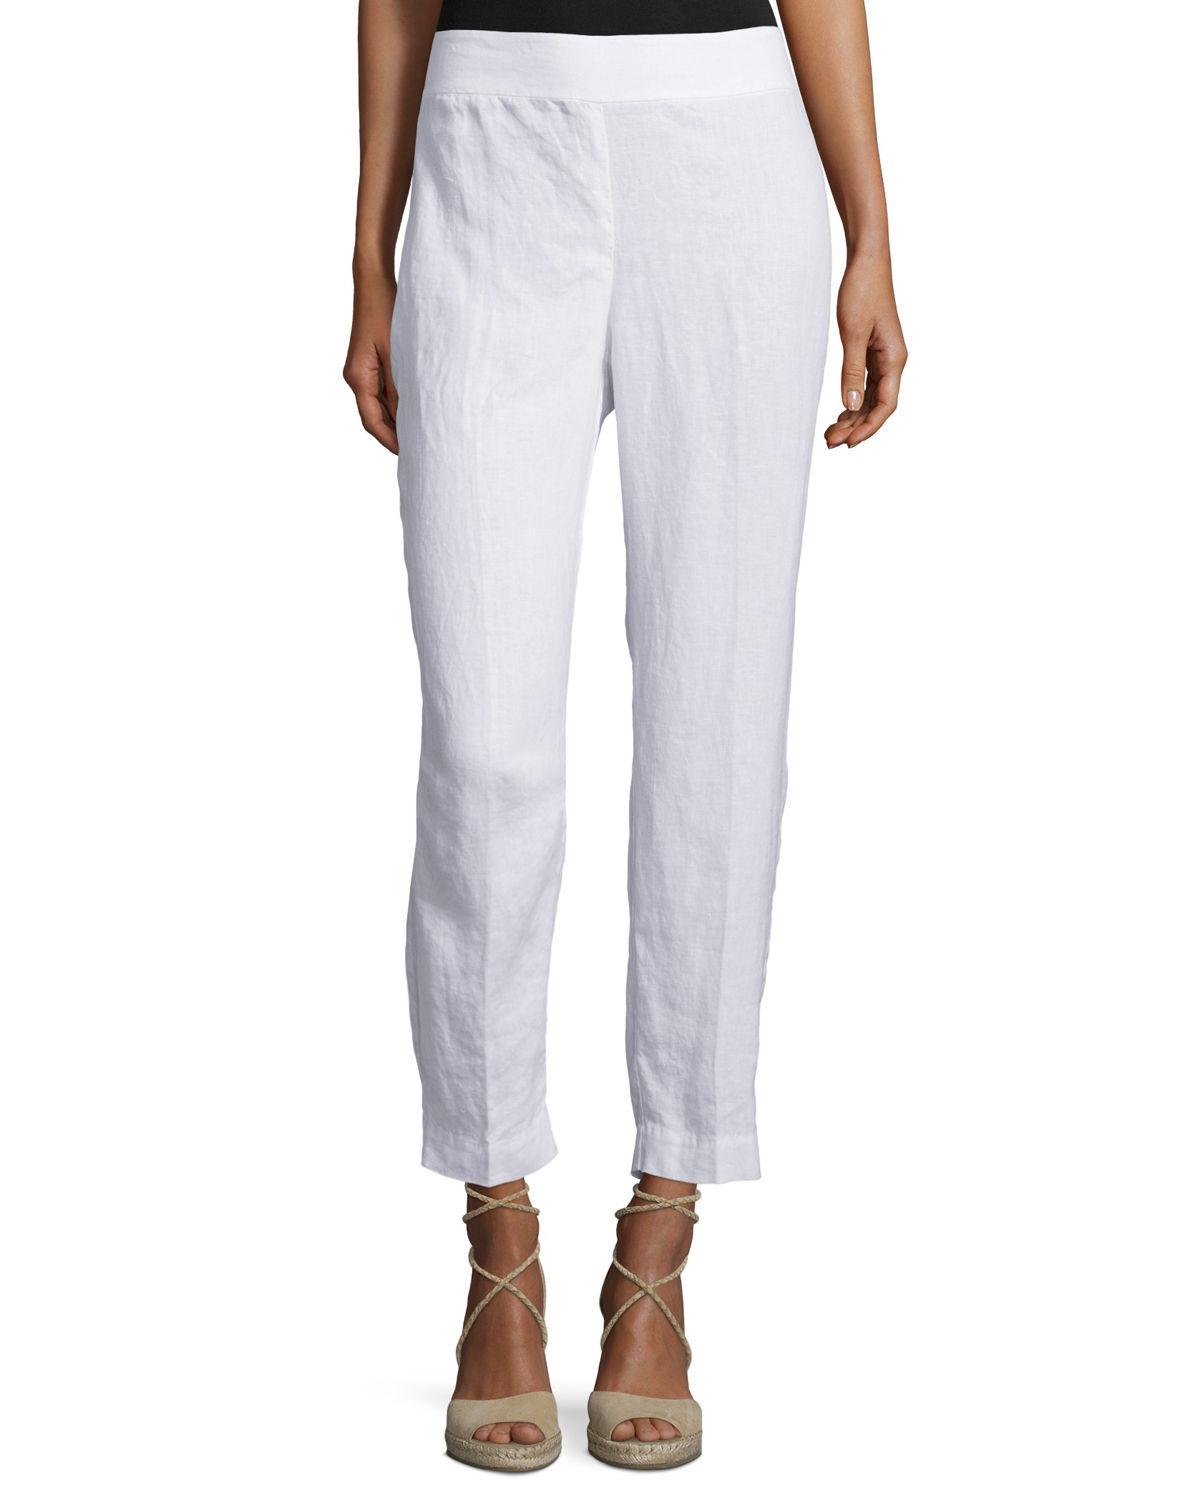 Lyst - Eileen Fisher Organic Linen Straight-leg Ankle Pants in White